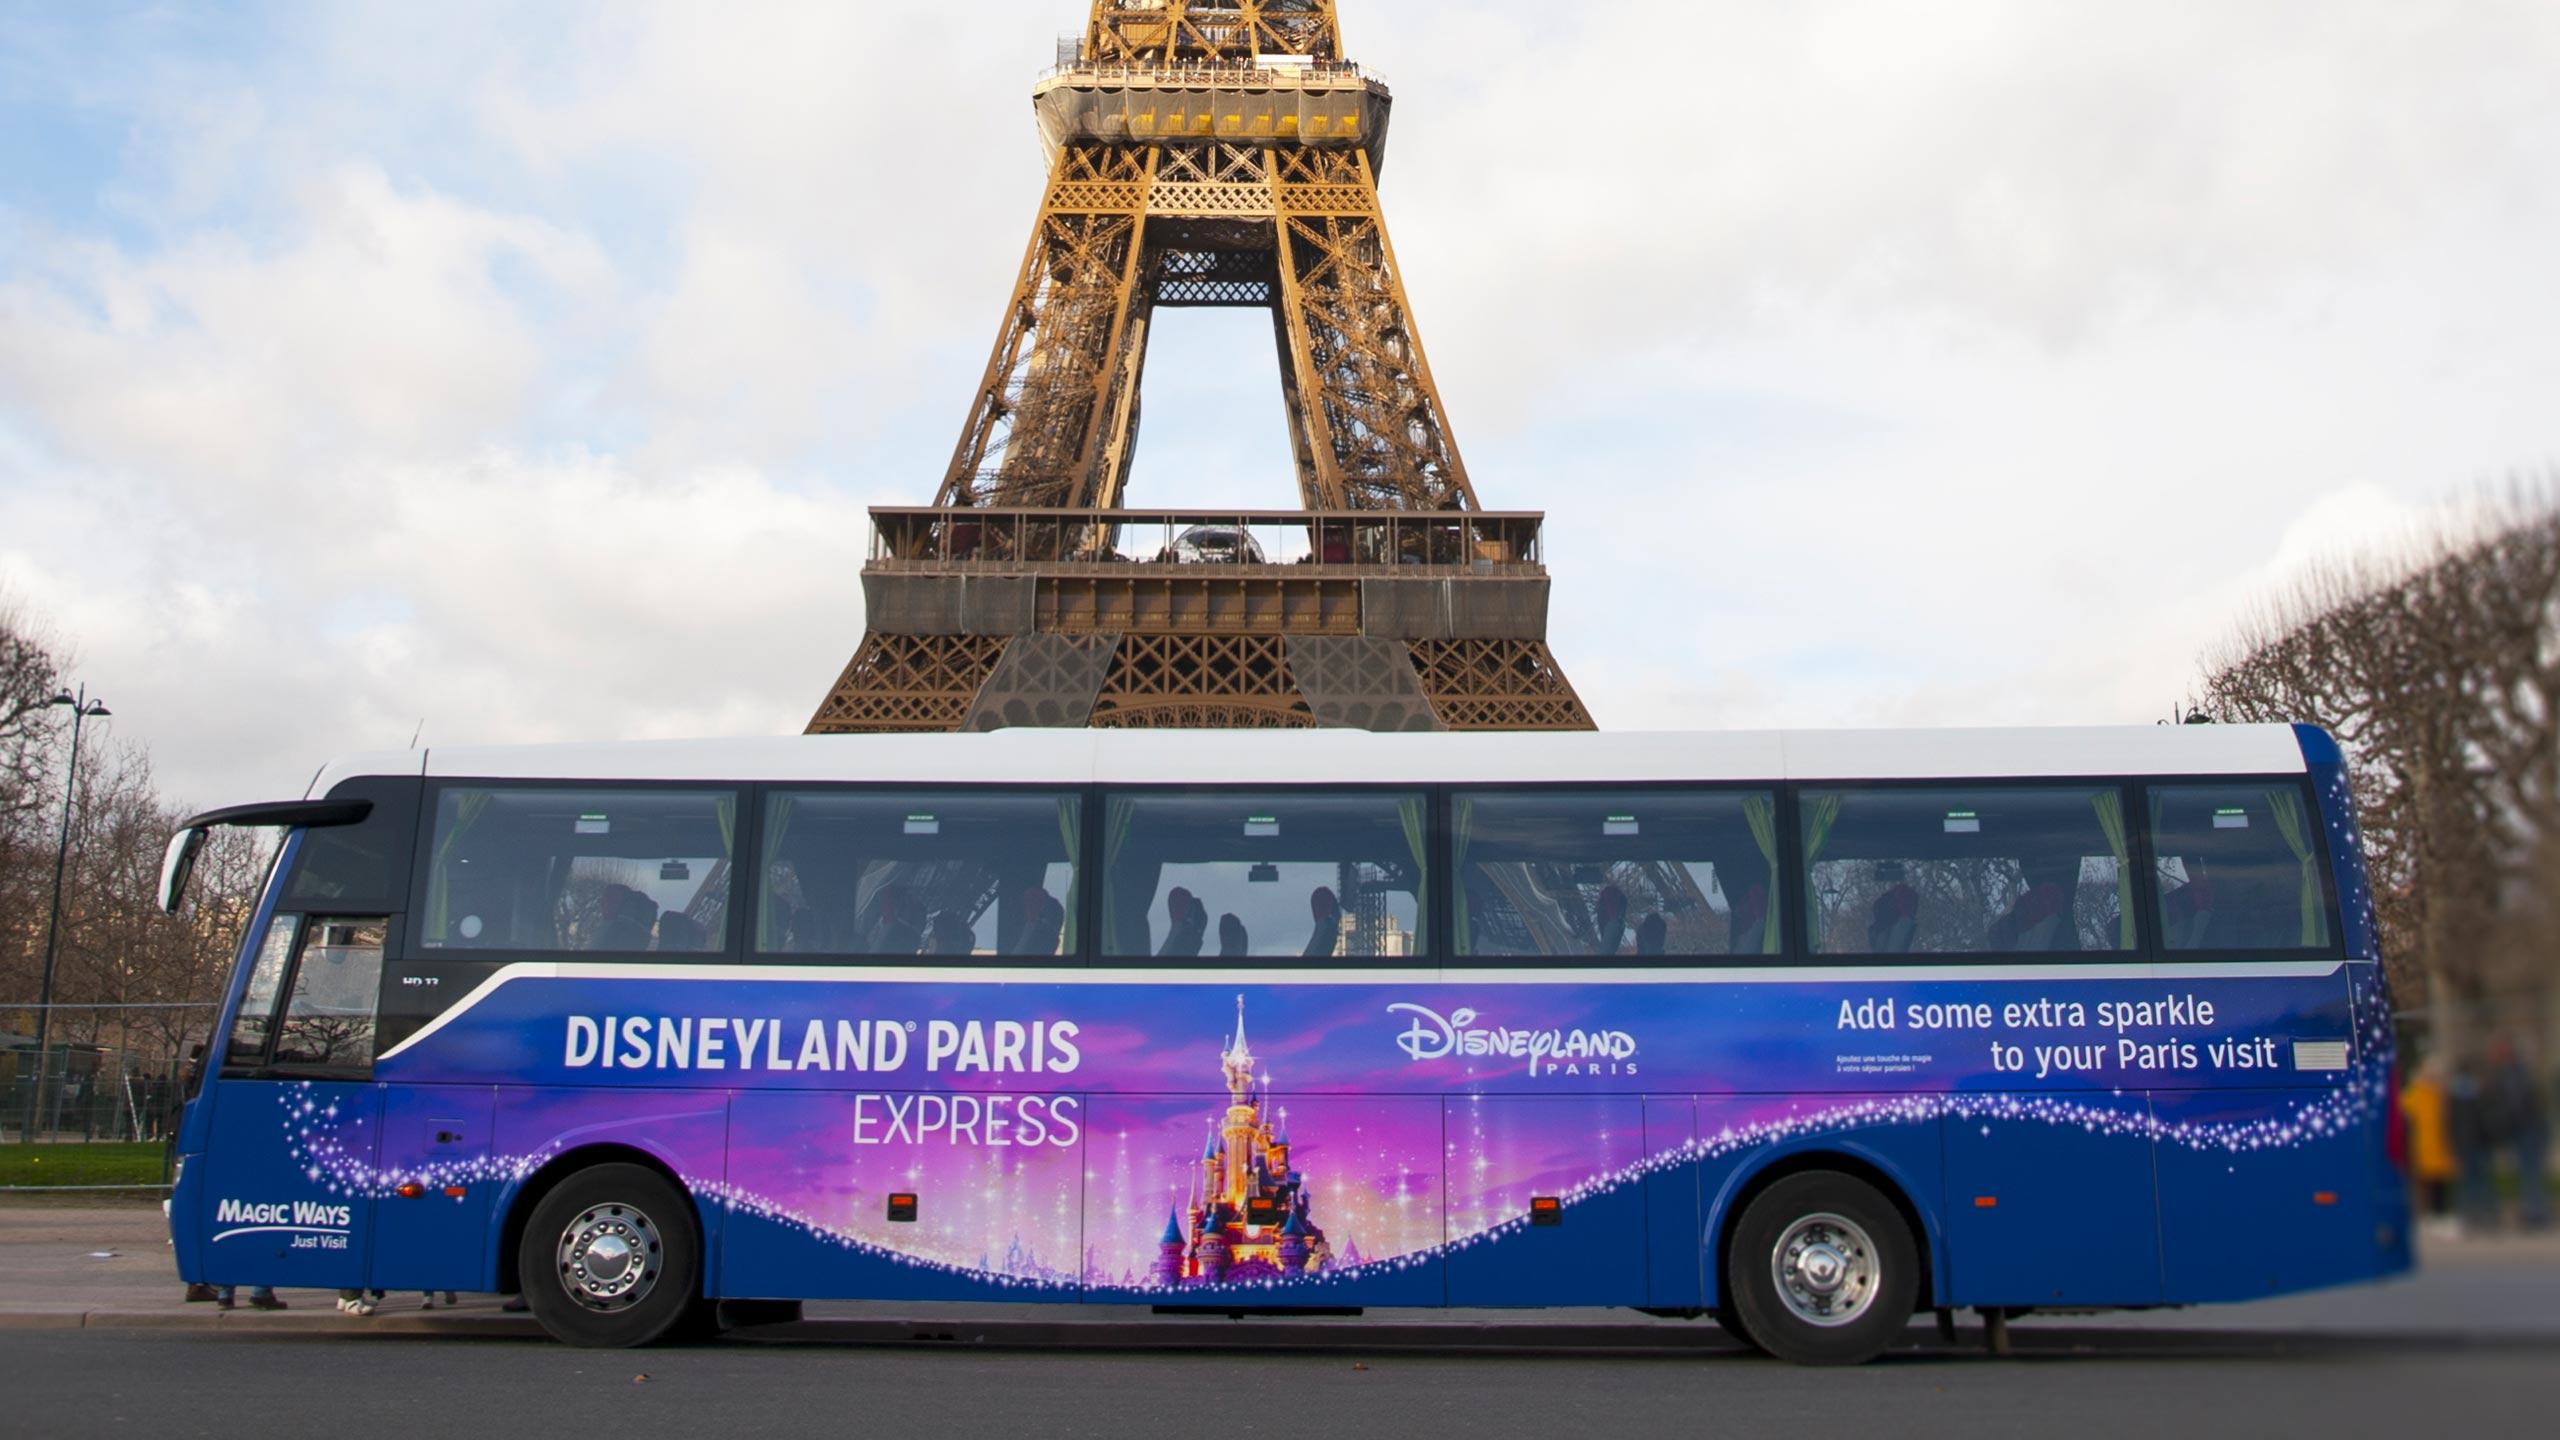 Theme Park Express Transportation to Walt Disney World